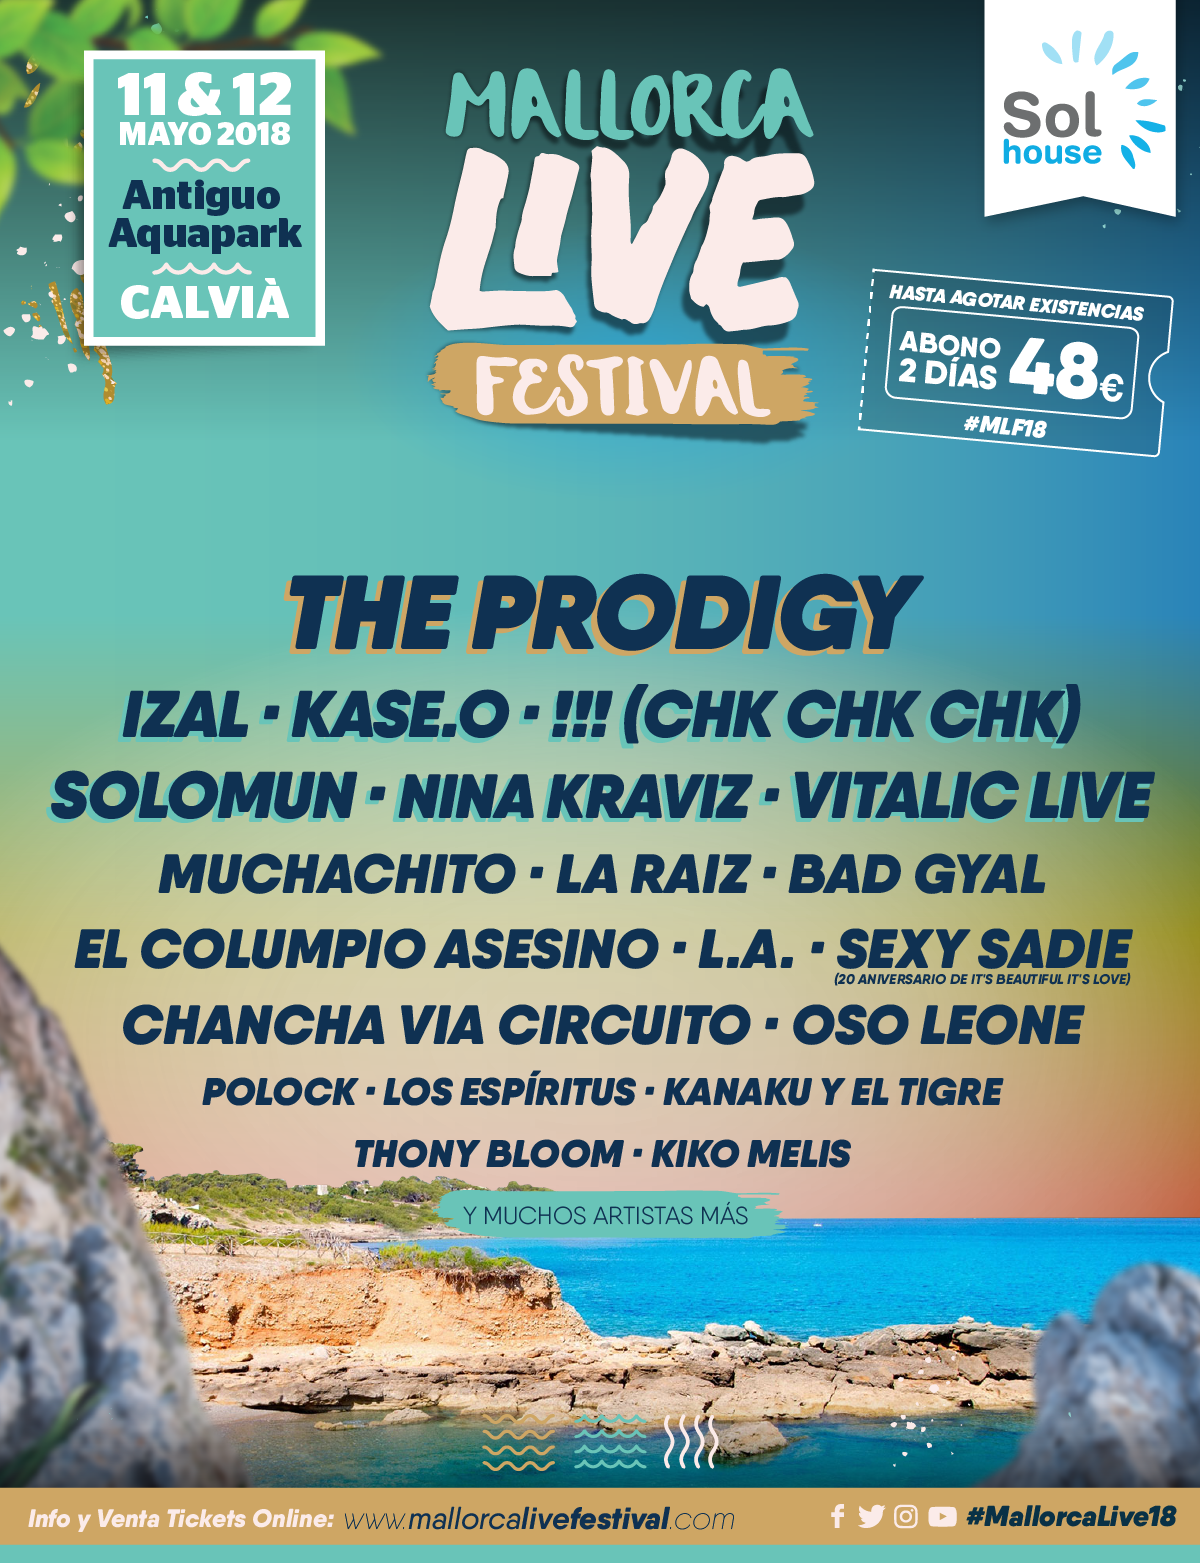 The Prodigy encabeza el cartel del Mallorca Live Festival 2018